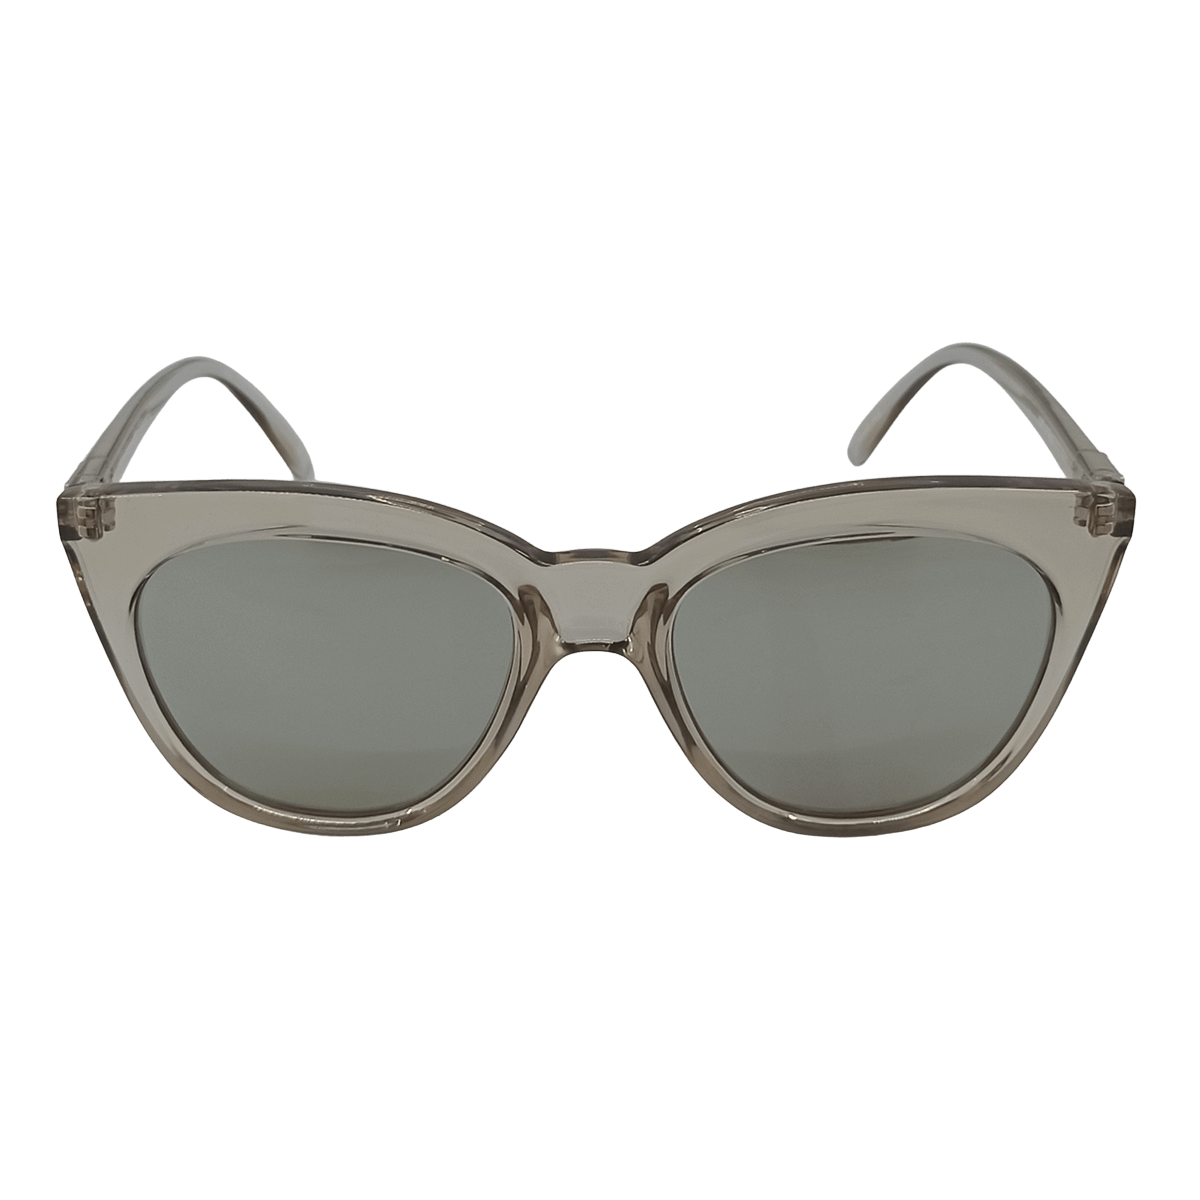 Designer Sunglasses at affordable Price - Nine Optic